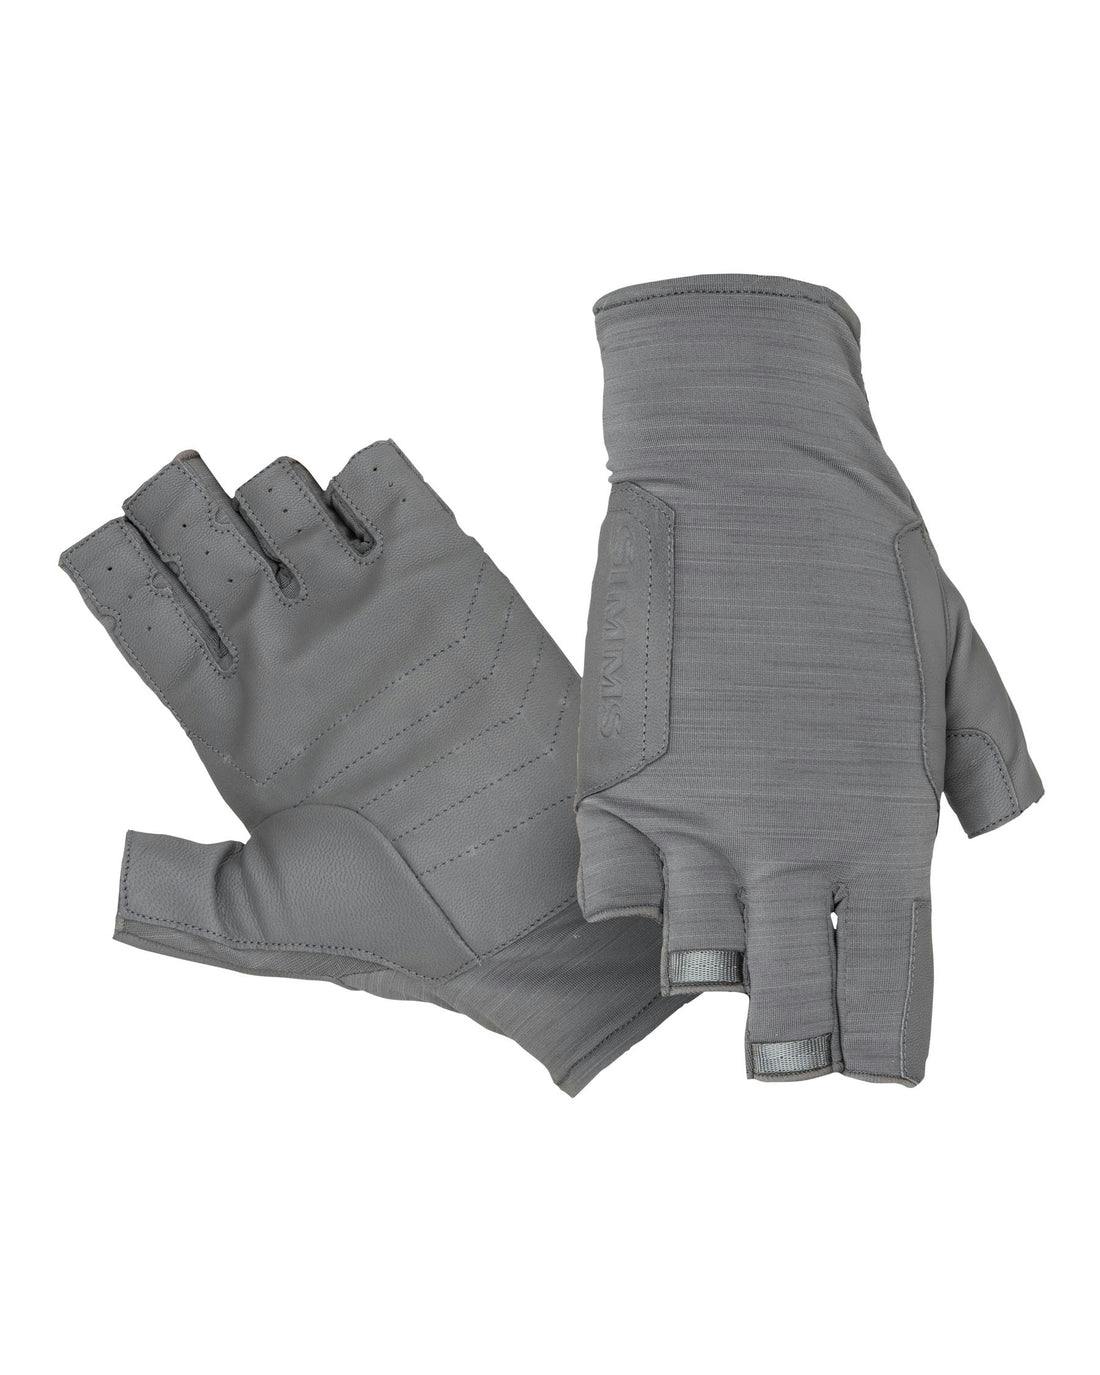 Simms Men's SolarFlex Guide Gloves